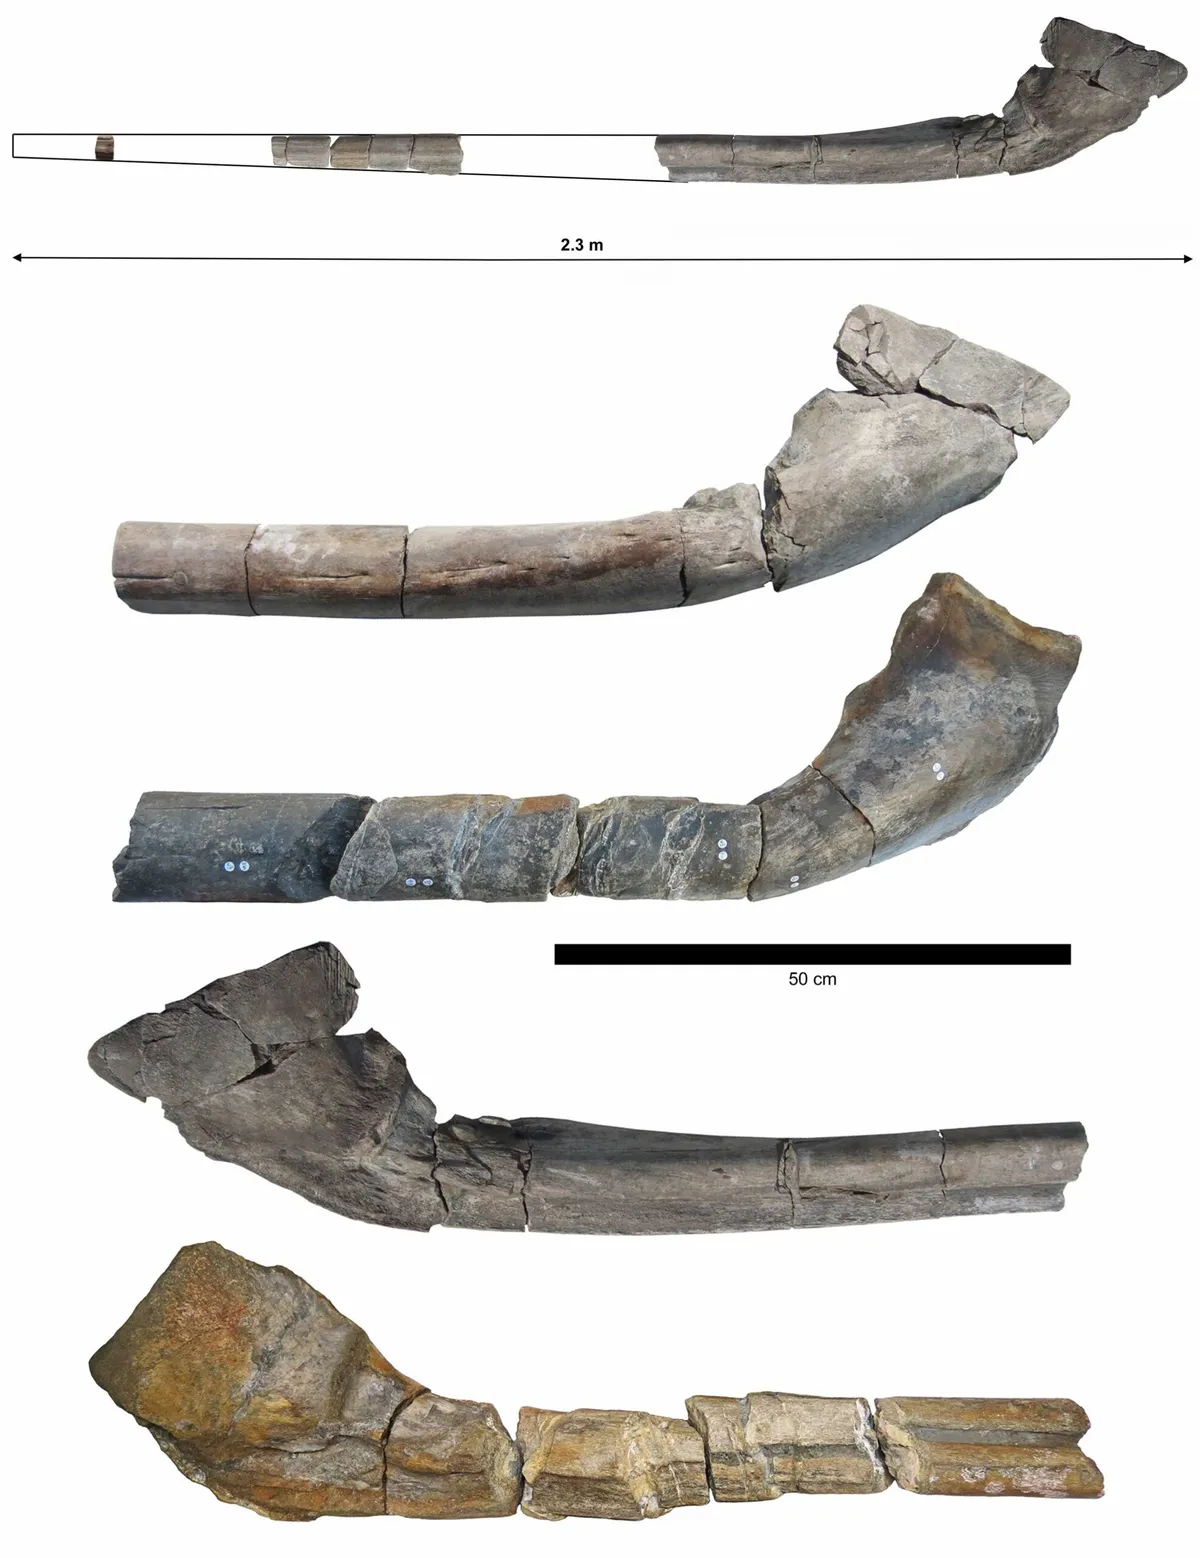 Comparison of Ichthyotitan severnensis specimens